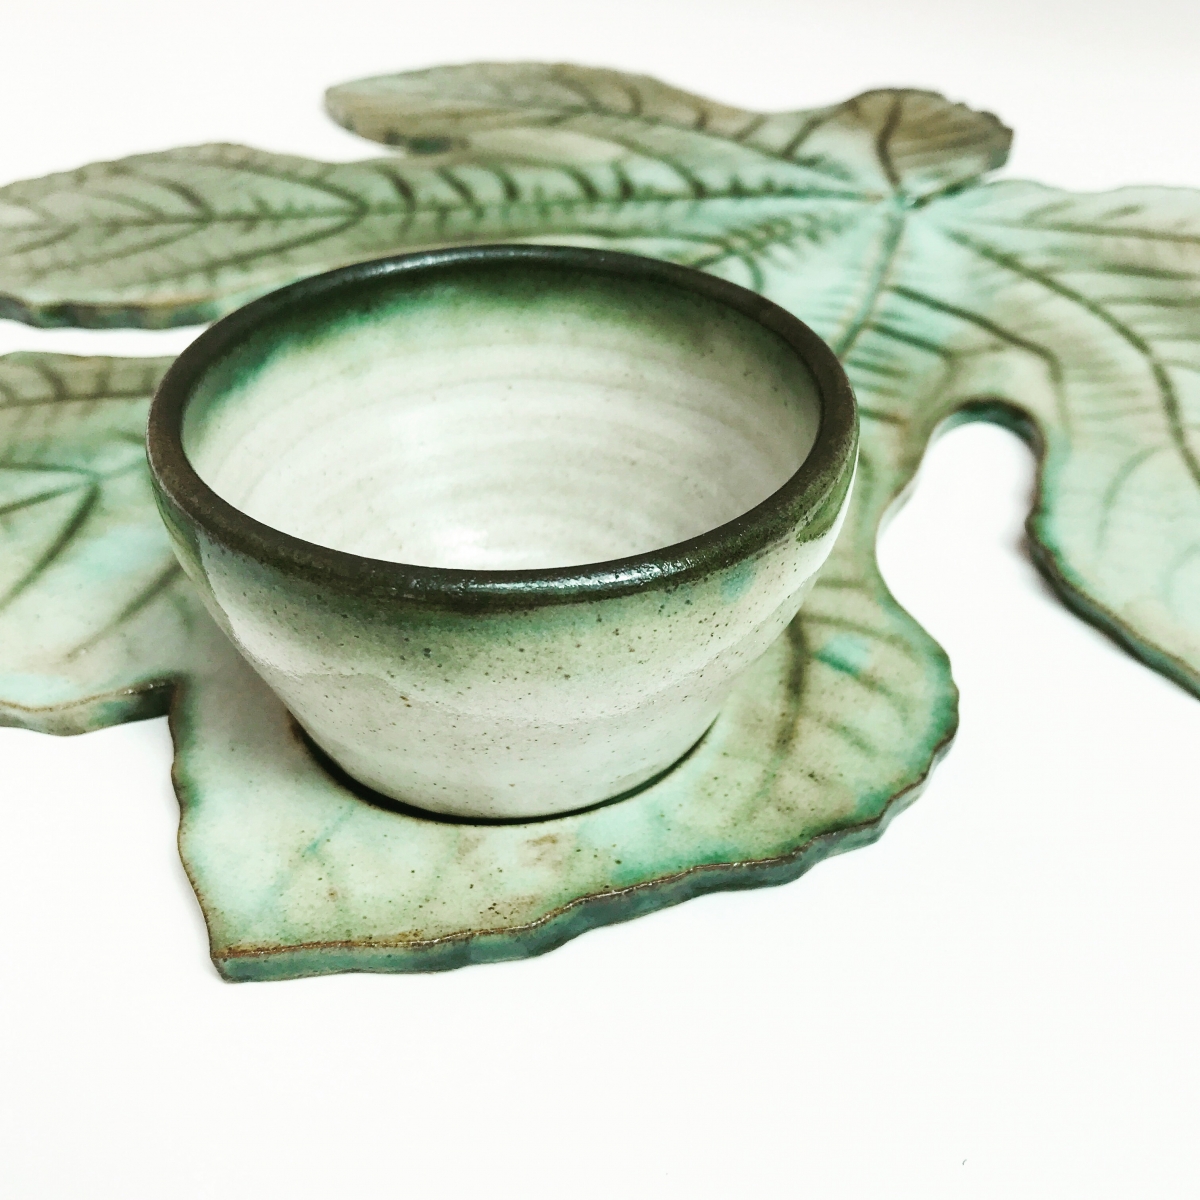 Fatsia Leaf Sharing Platter Condiment Bowl Close Up